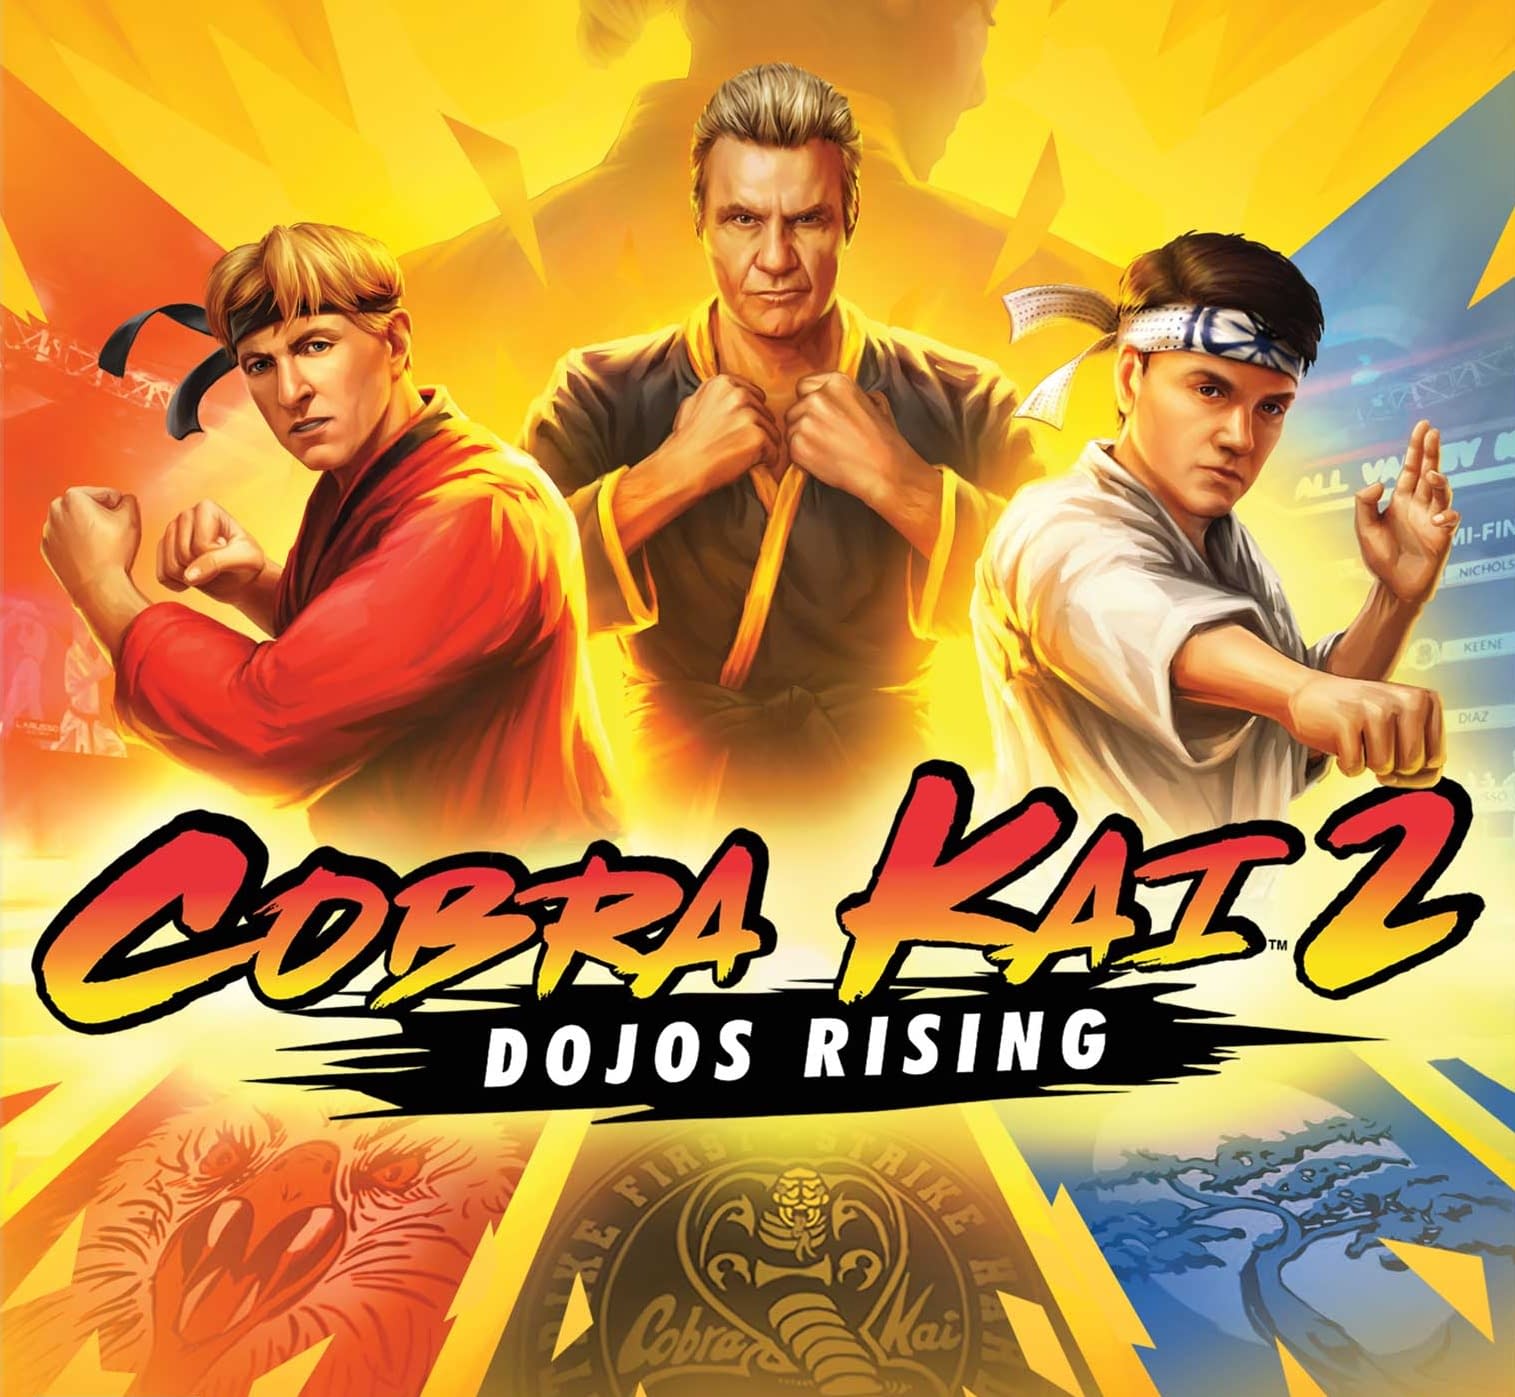 Show No Mercy In the Netflix Cobra Kai Board Game